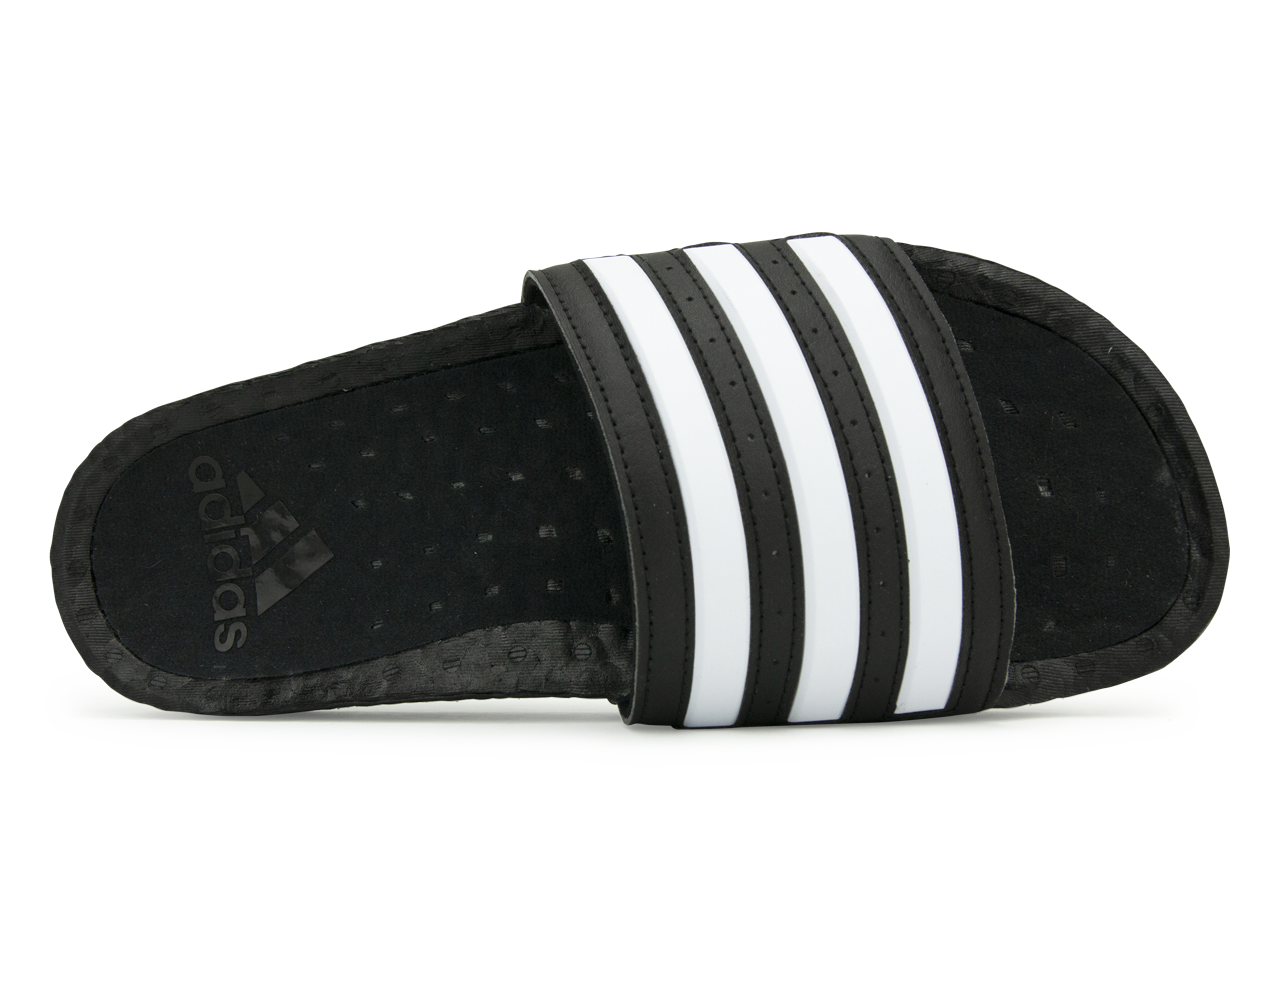 adidas Men's Adilette Boost Sandals Black/White Sole